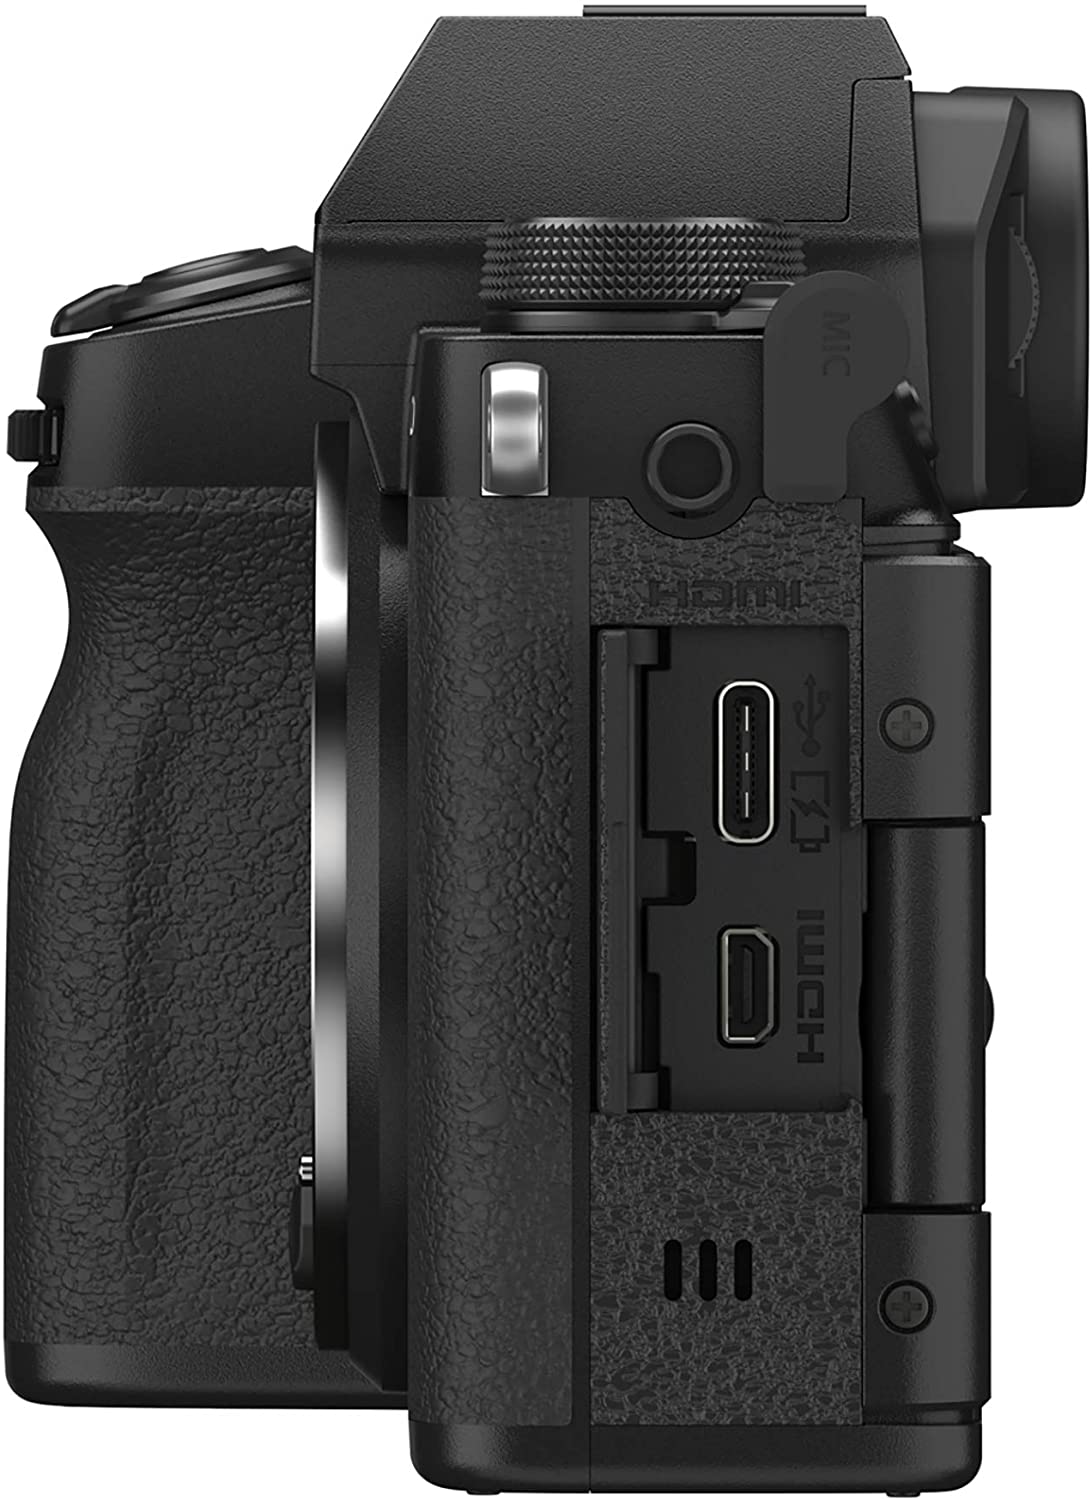 Fujifilm X-S10 Mirrorless Camera Body- Black